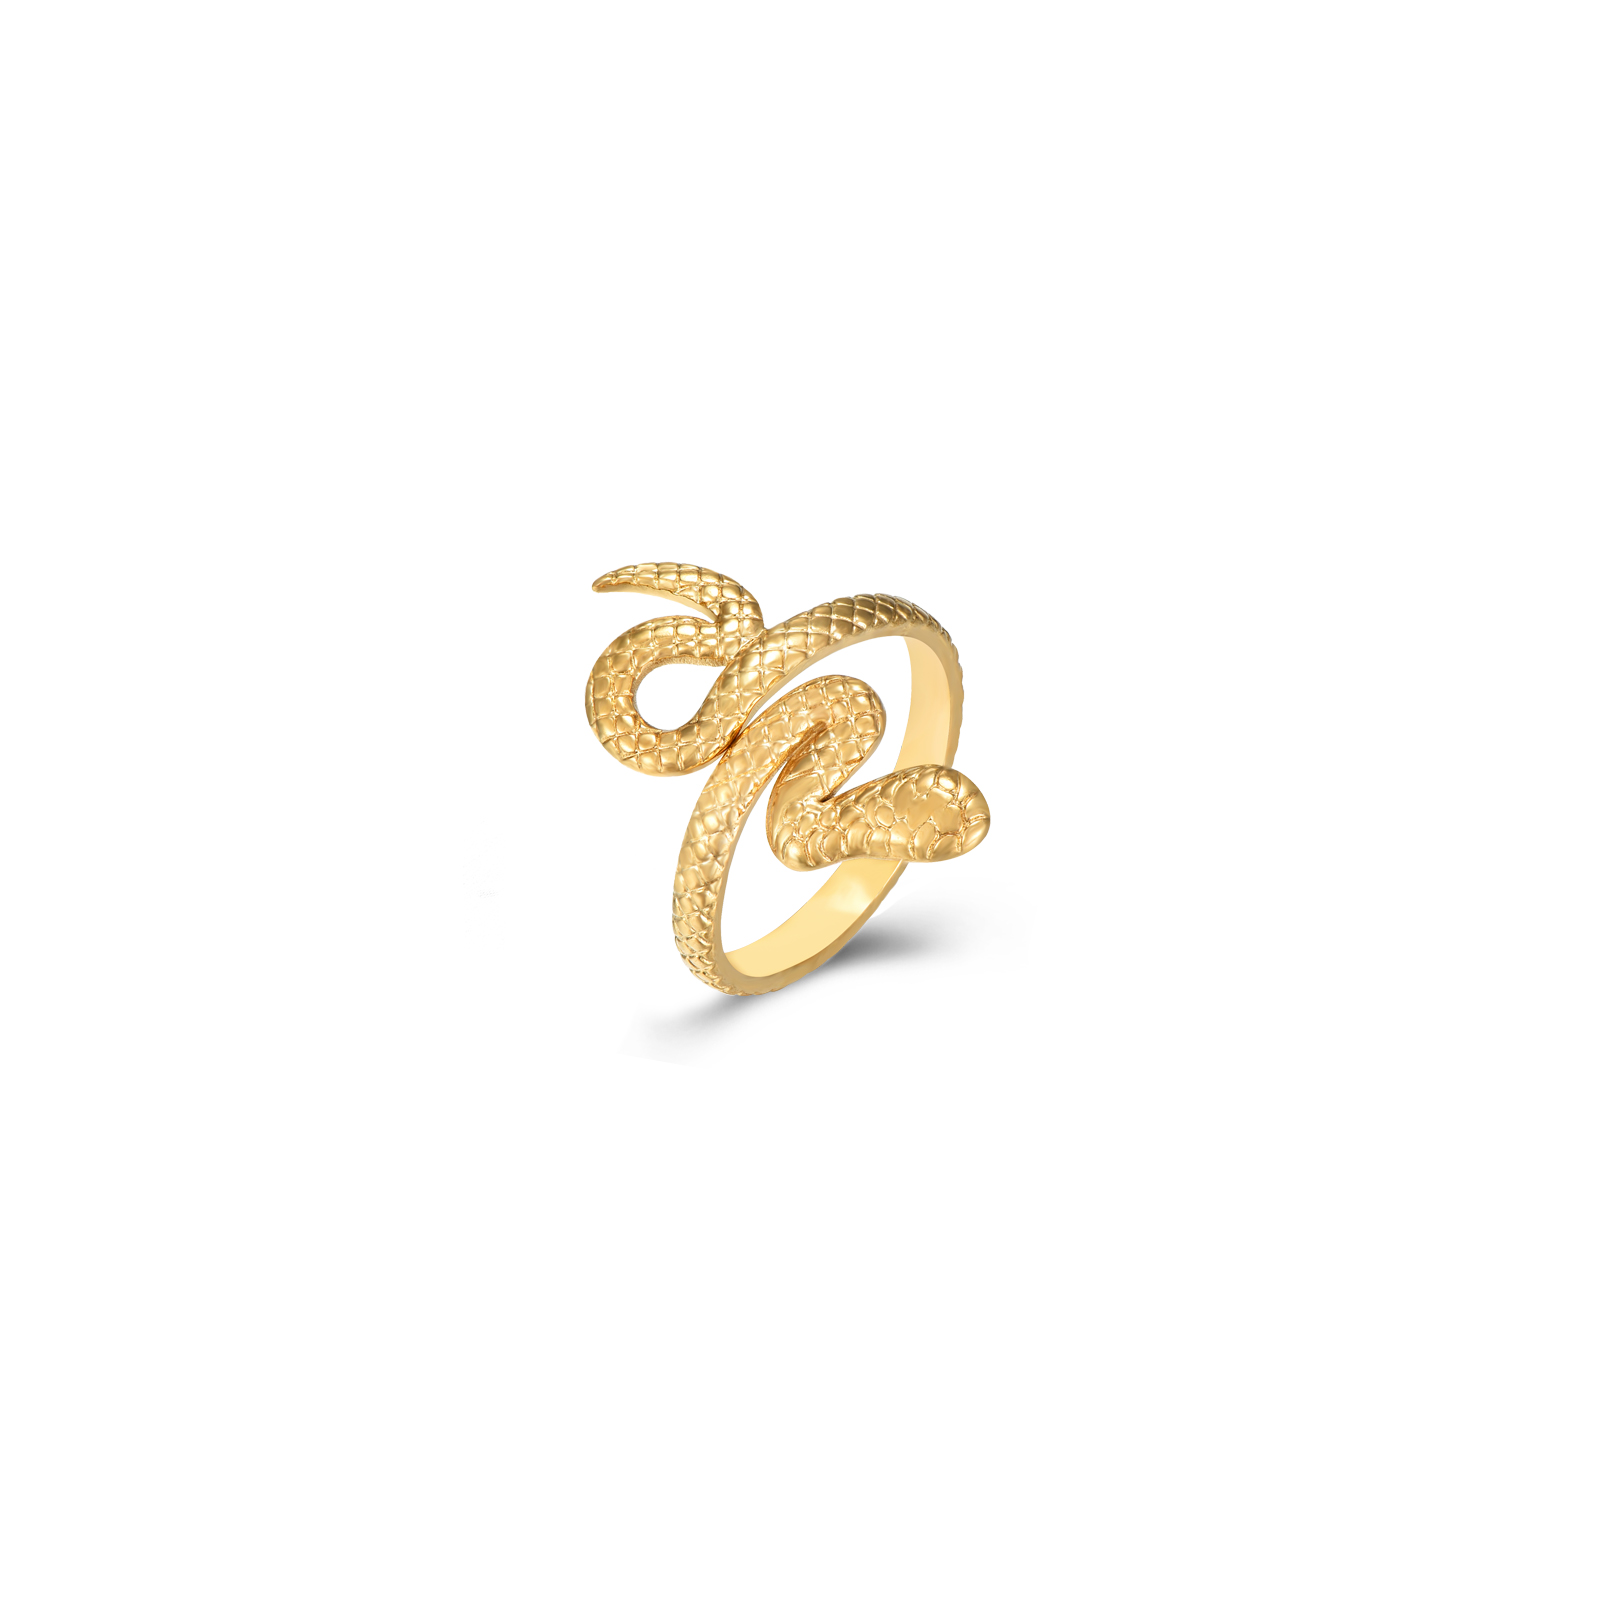 Anillo Acero Liso Anillo Acero - Serpiente - Ajustable de 12 a16 - Color Oro